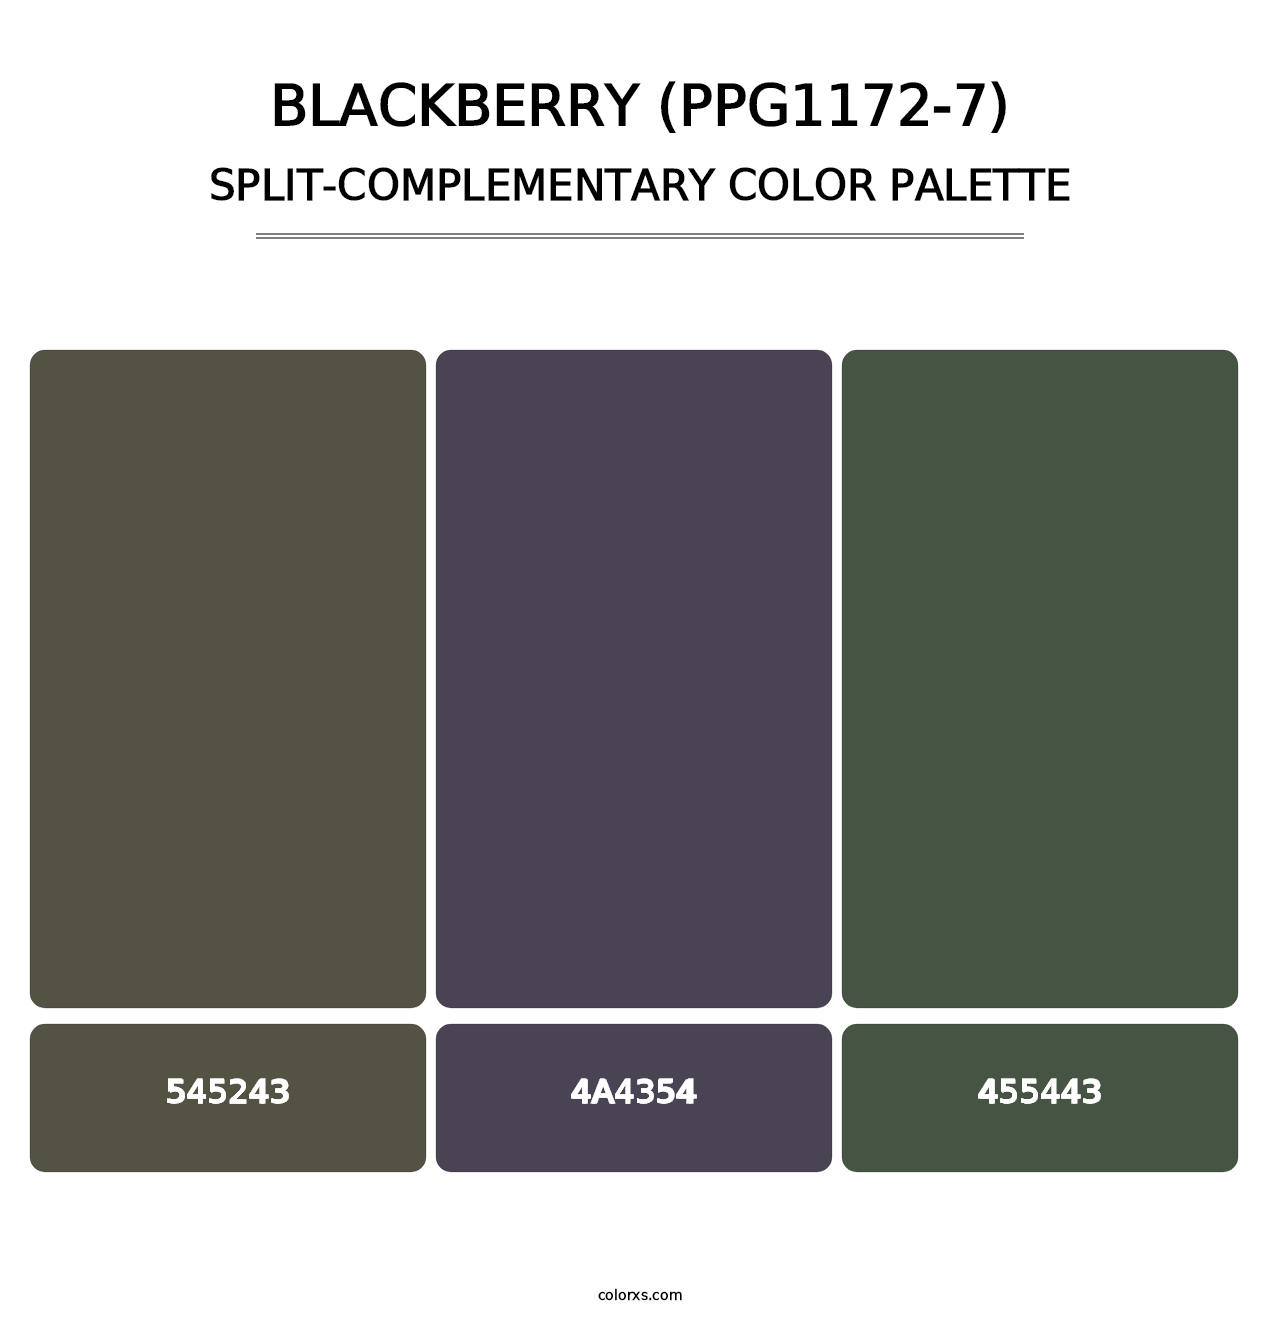 Blackberry (PPG1172-7) - Split-Complementary Color Palette